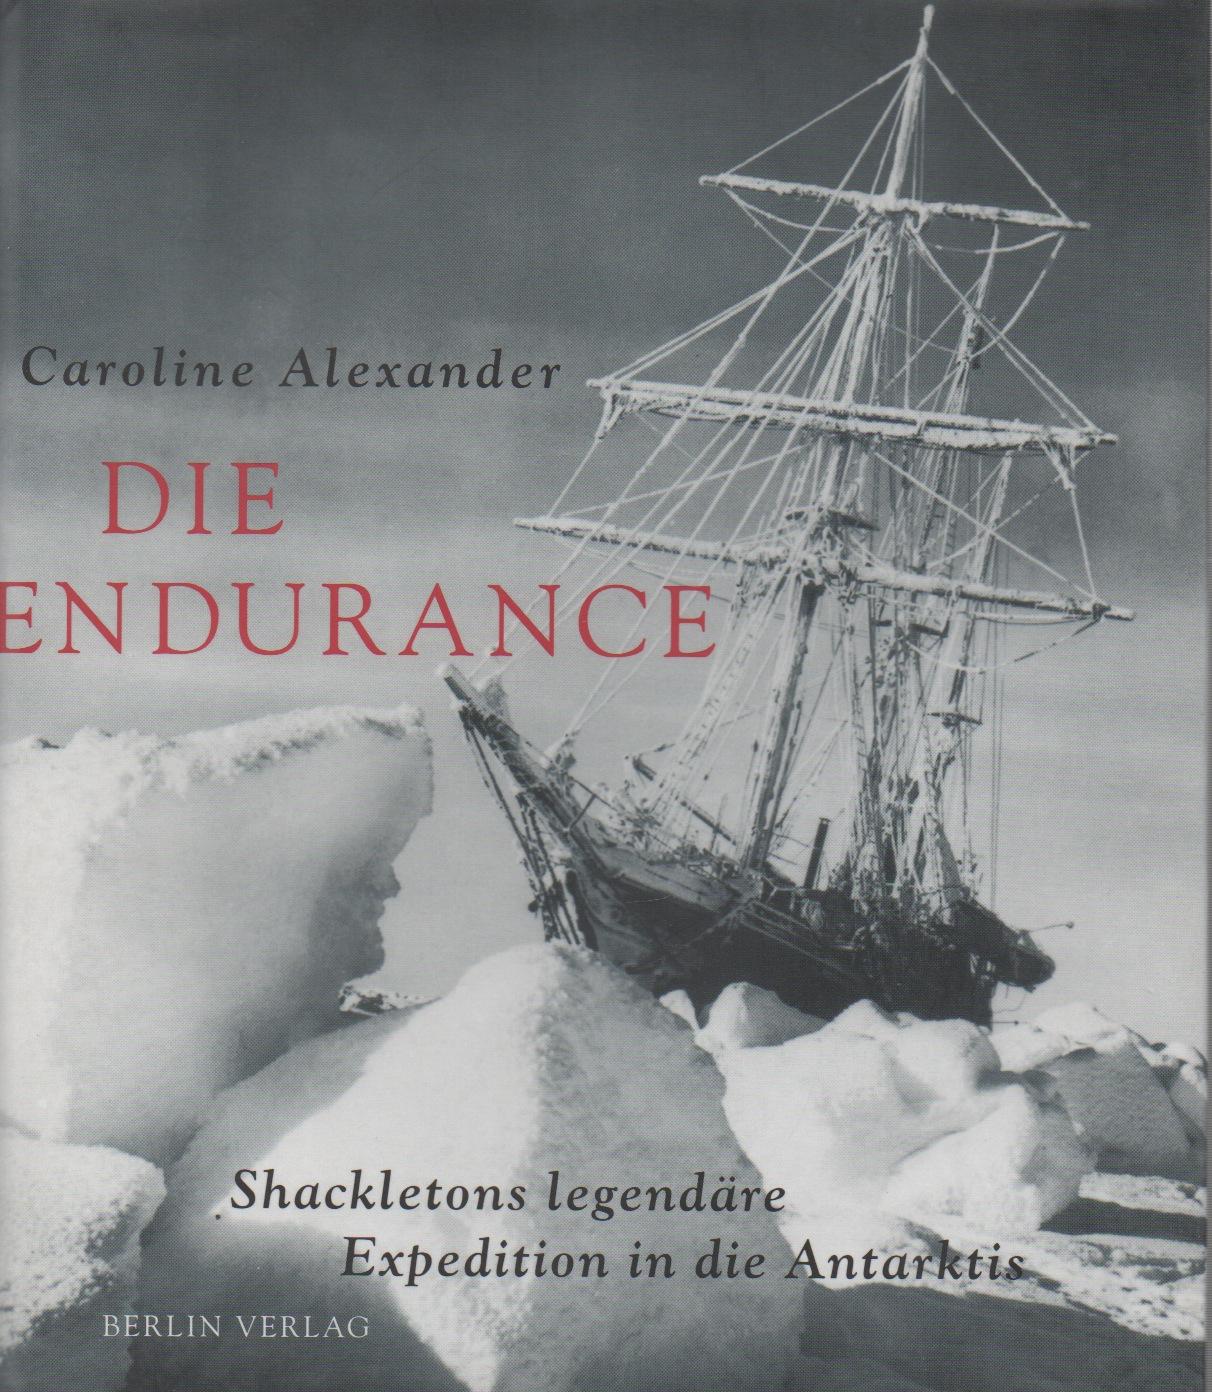 Die endurance. Shackletons legendare expedition in die antarktis